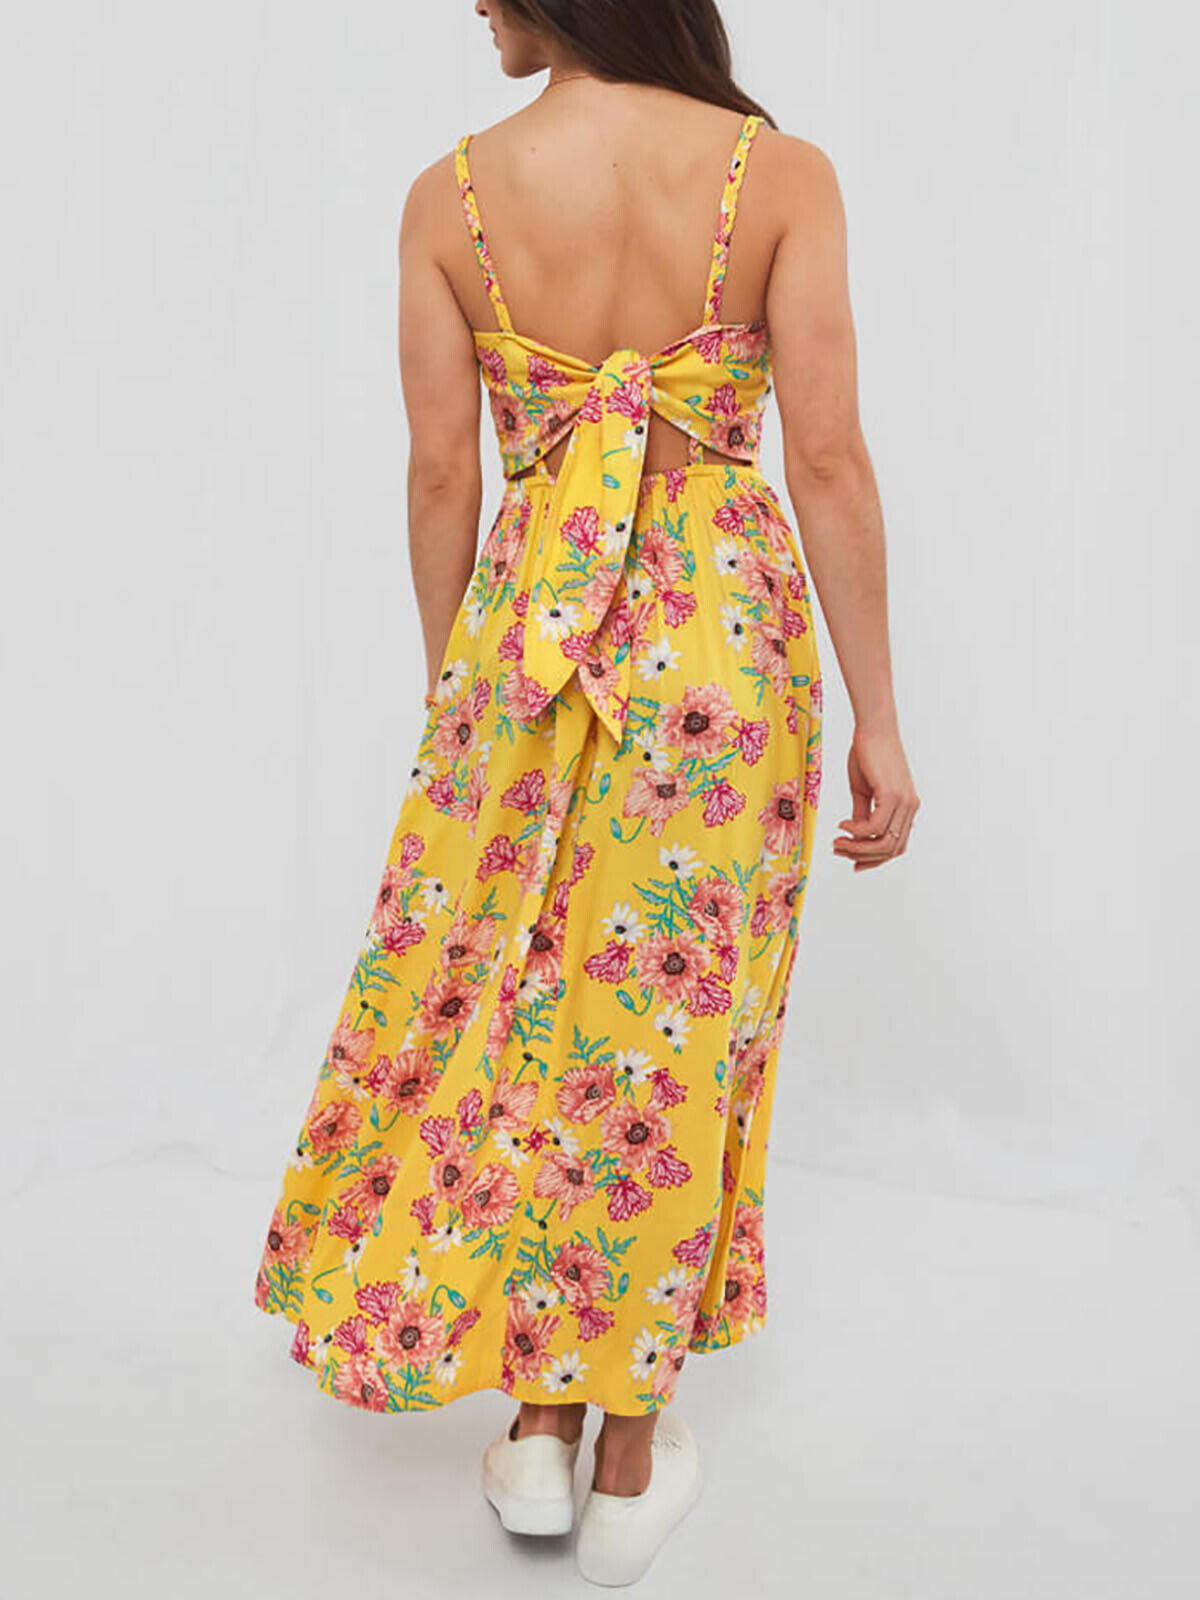 Joe Browns Yellow Joyful Summer Dress Sizes 12, 14, 16, 18 RRP £55